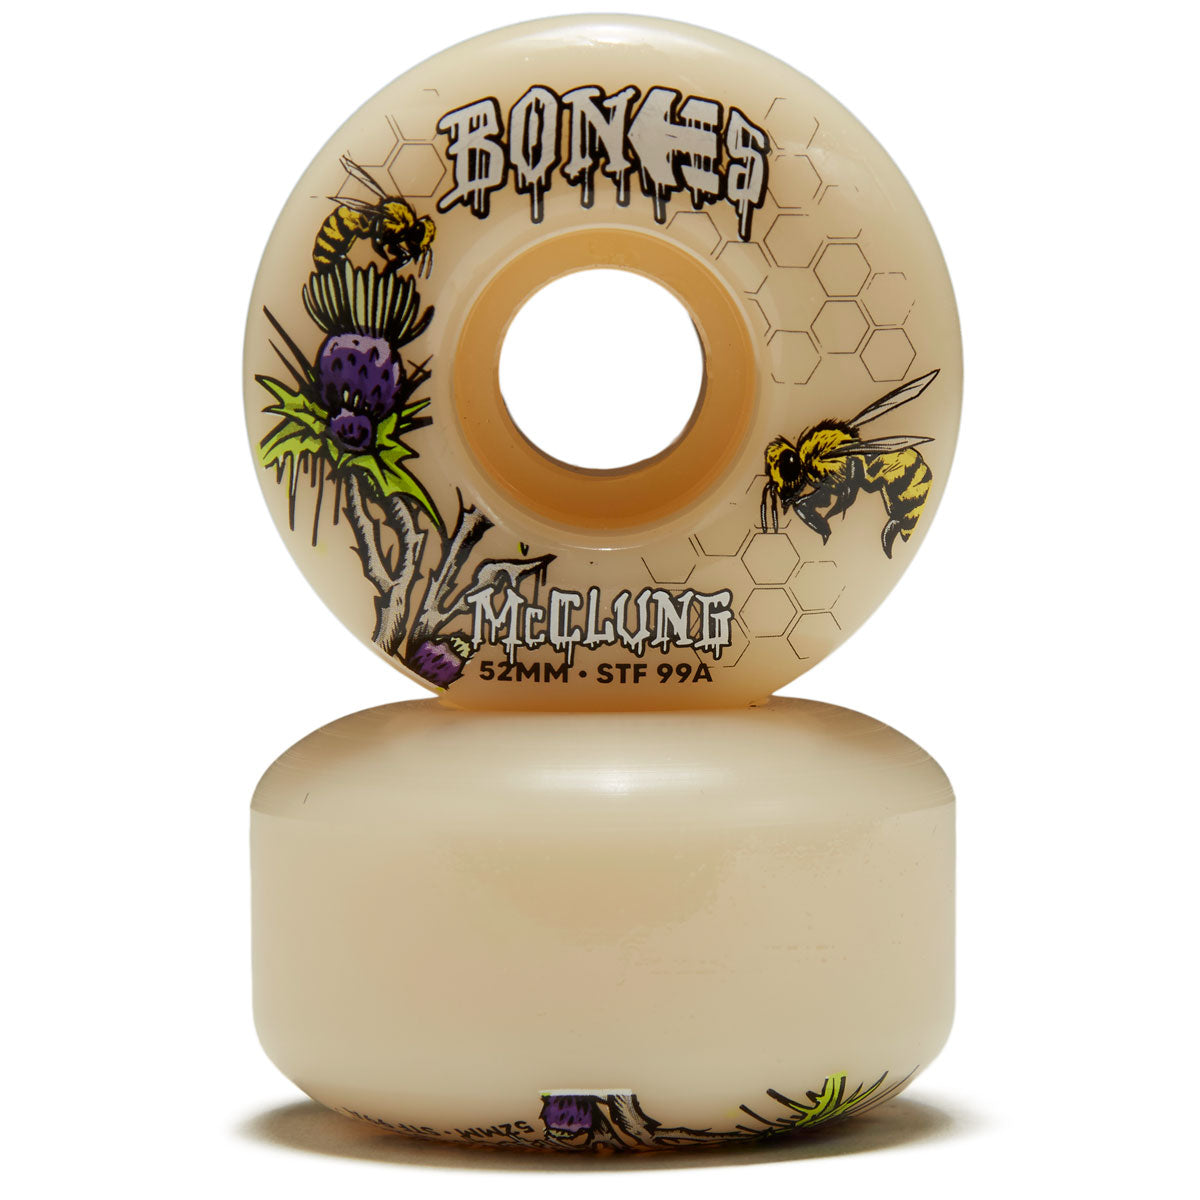 Bones x Etnies Trevor McClung 99A V5 Sidecut Skateboard Wheels - 52mm image 2